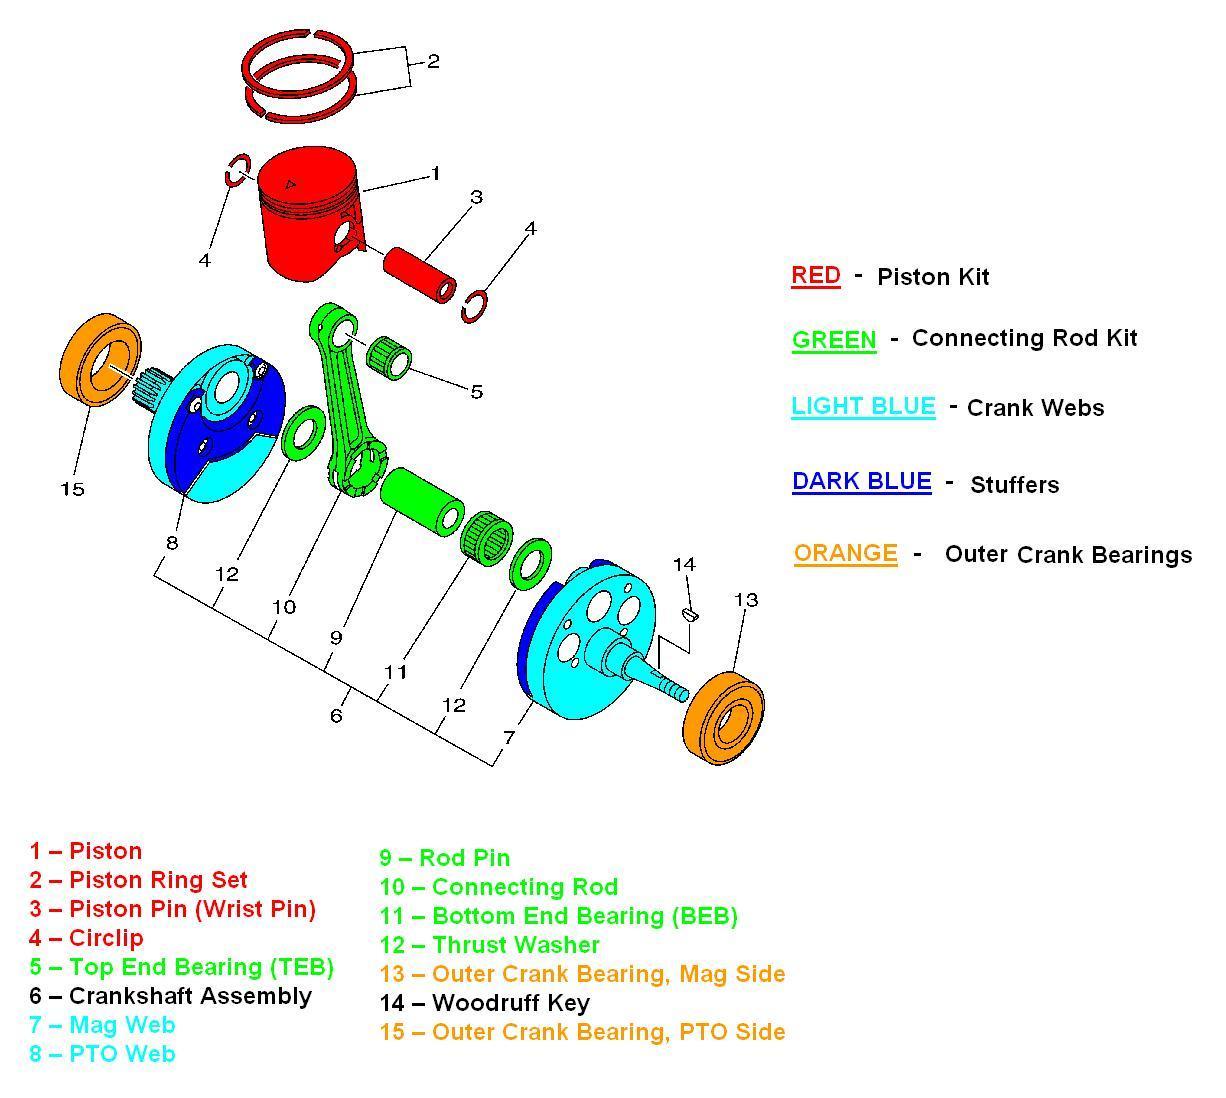 Anatomy Of A Crankshaft Crank Works